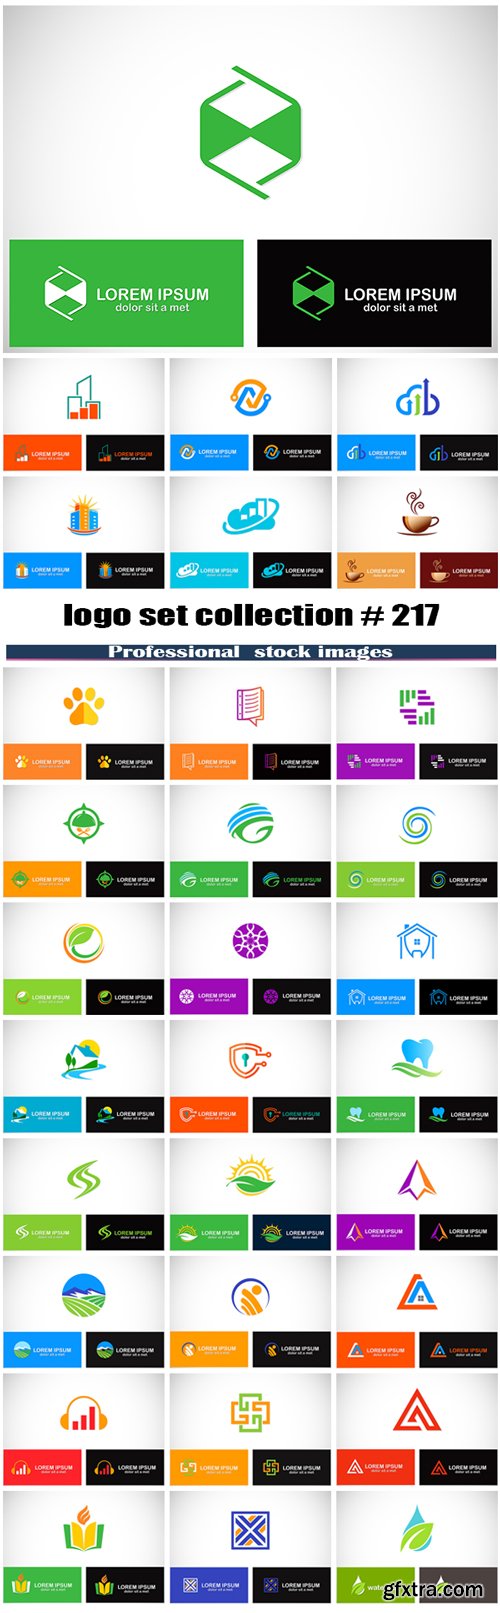 logo set collection # 217